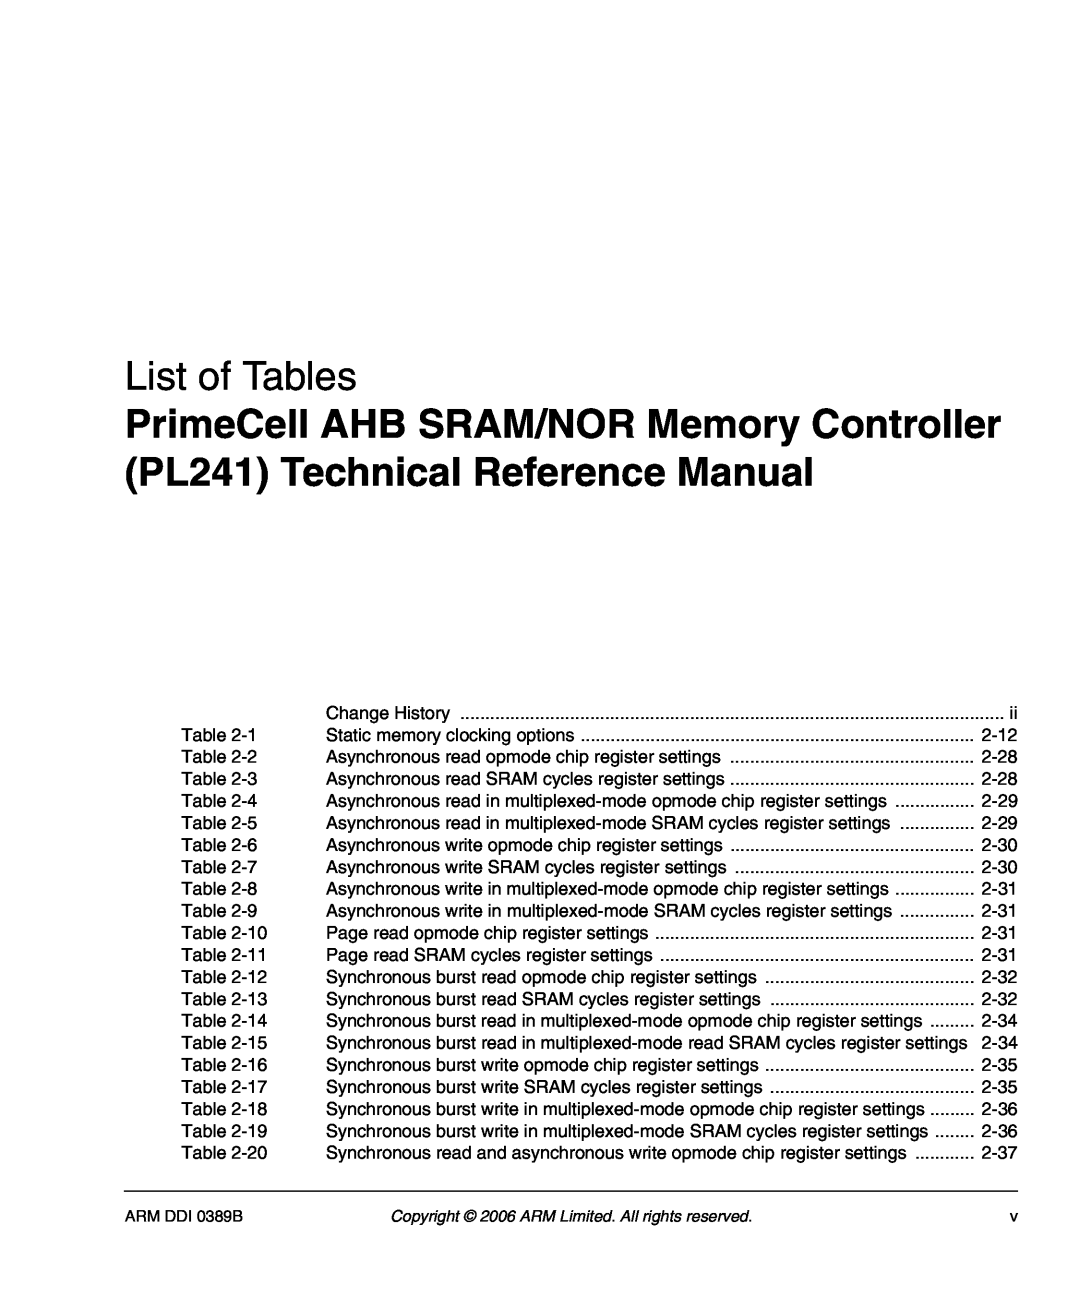 SMC Networks AHB SRAM/NOR, PL241 manual List of Tables 